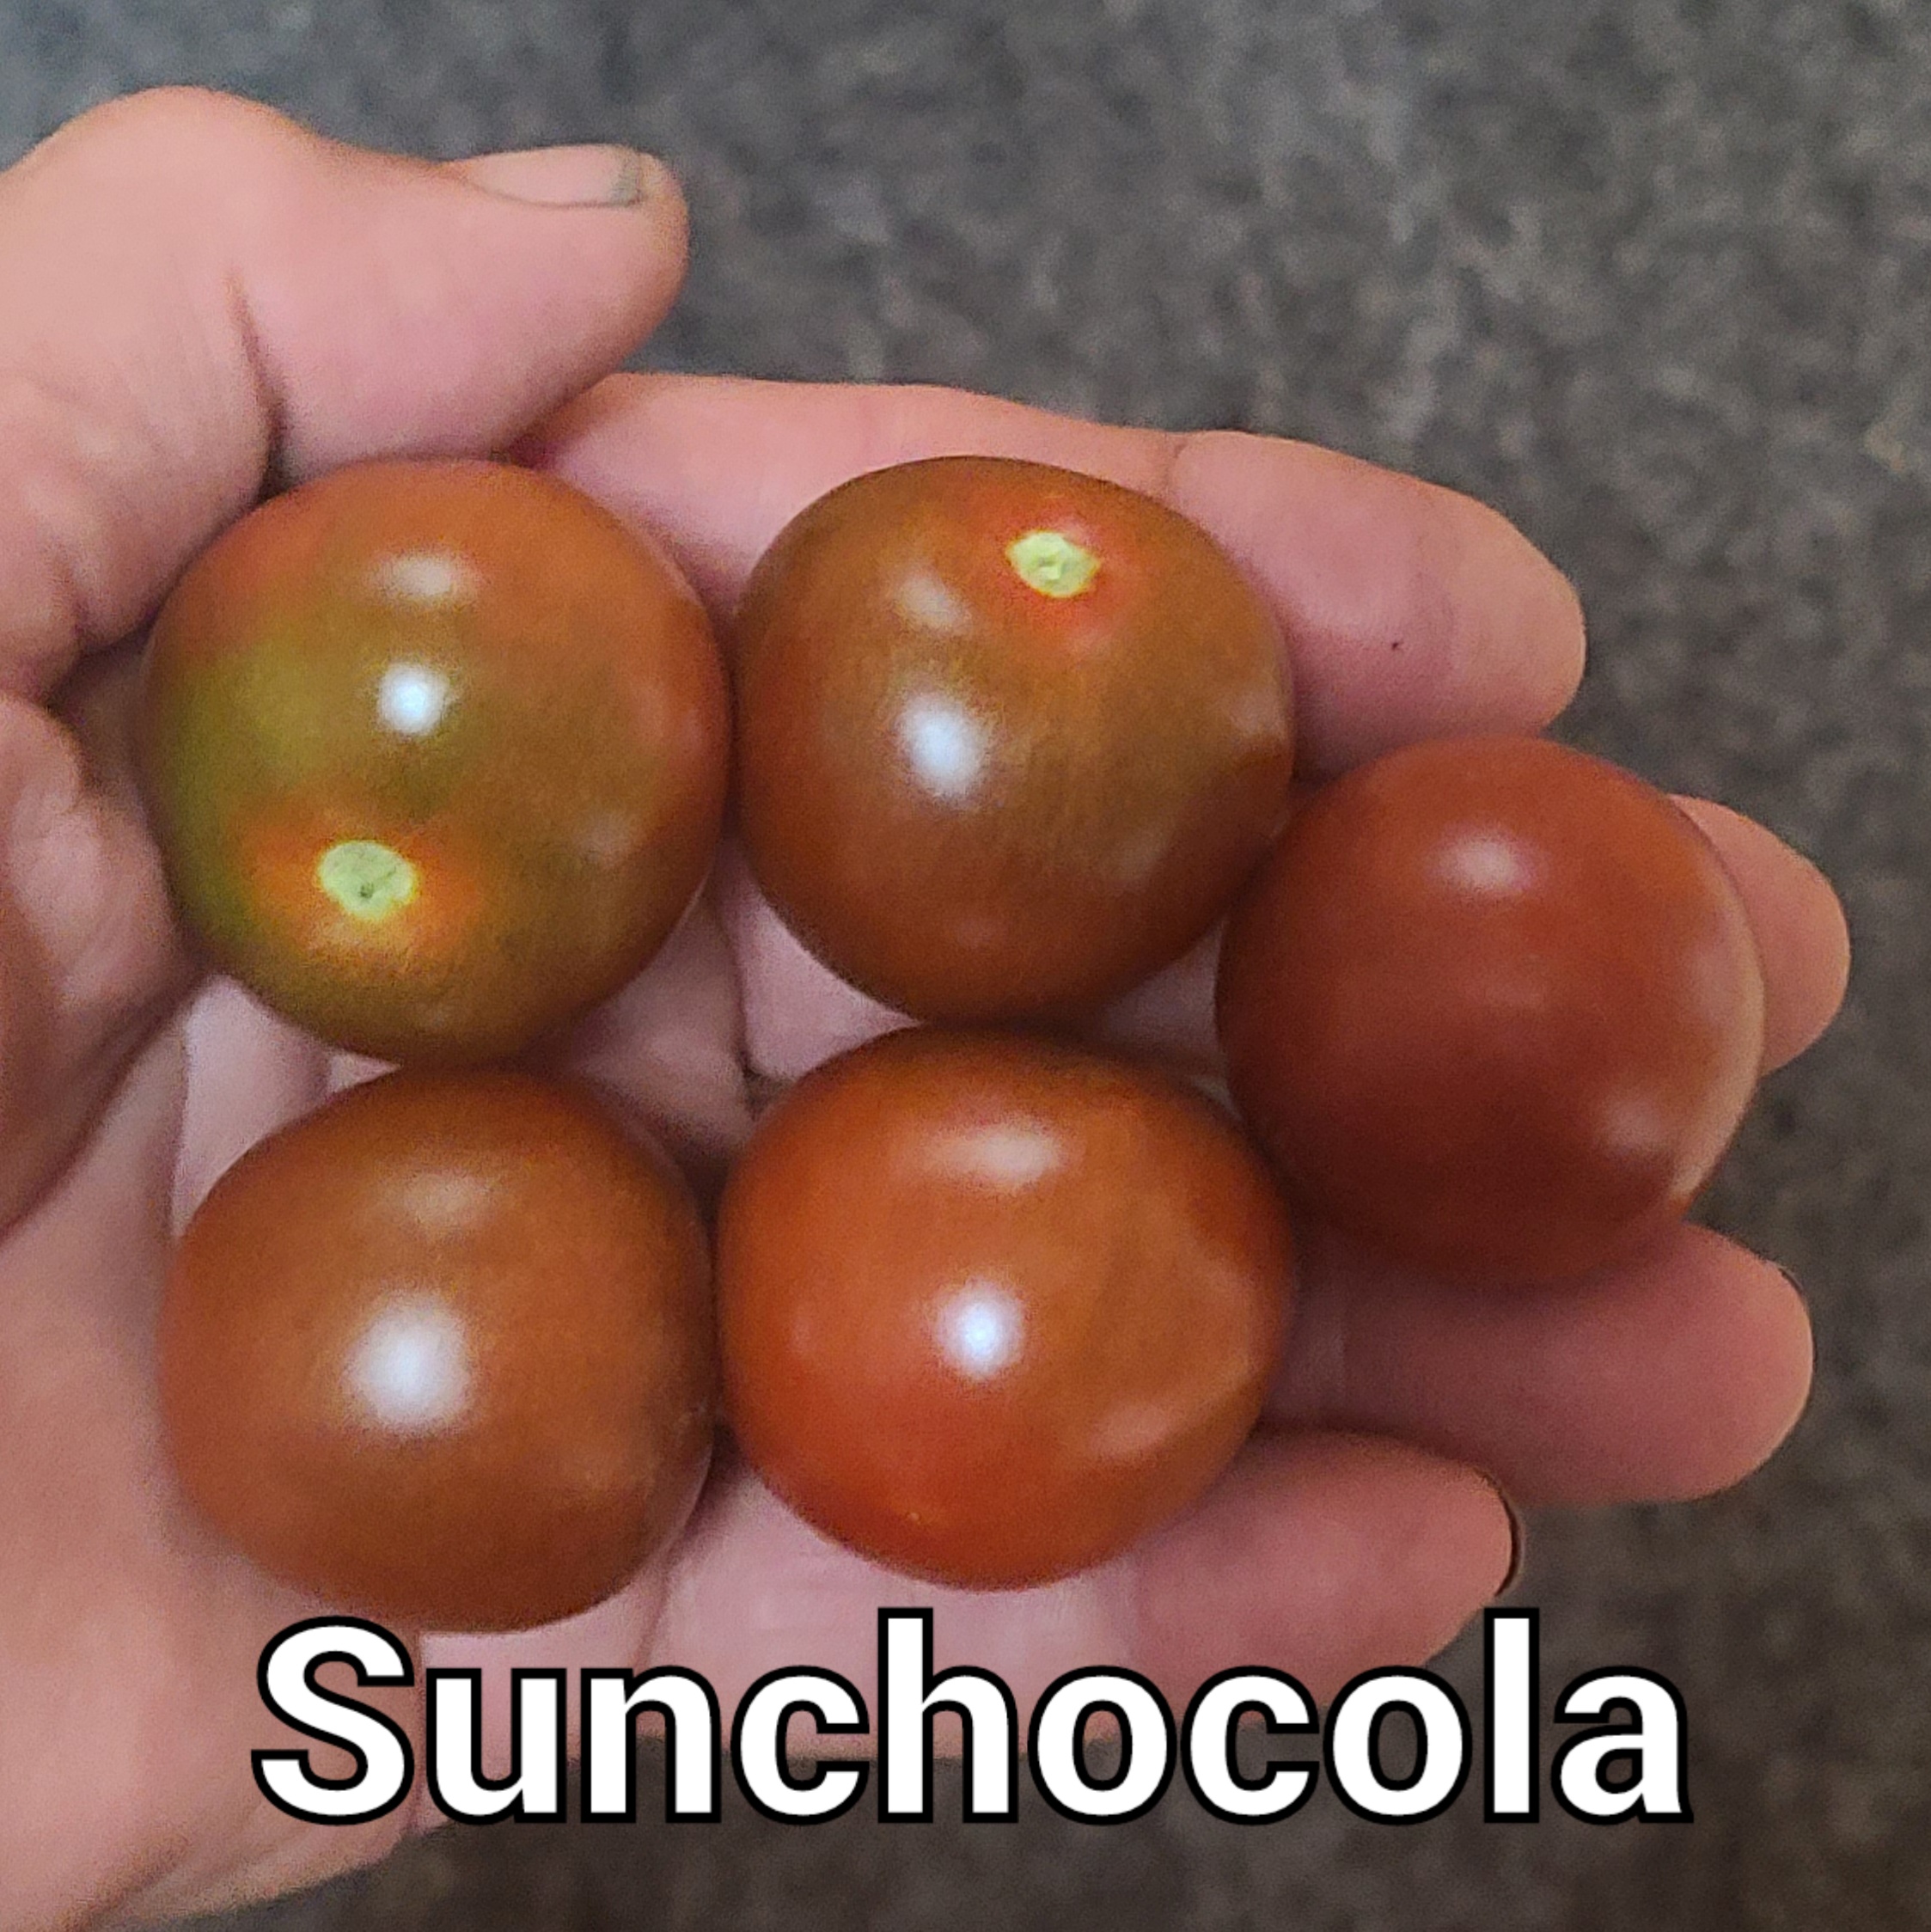 Sunchocola